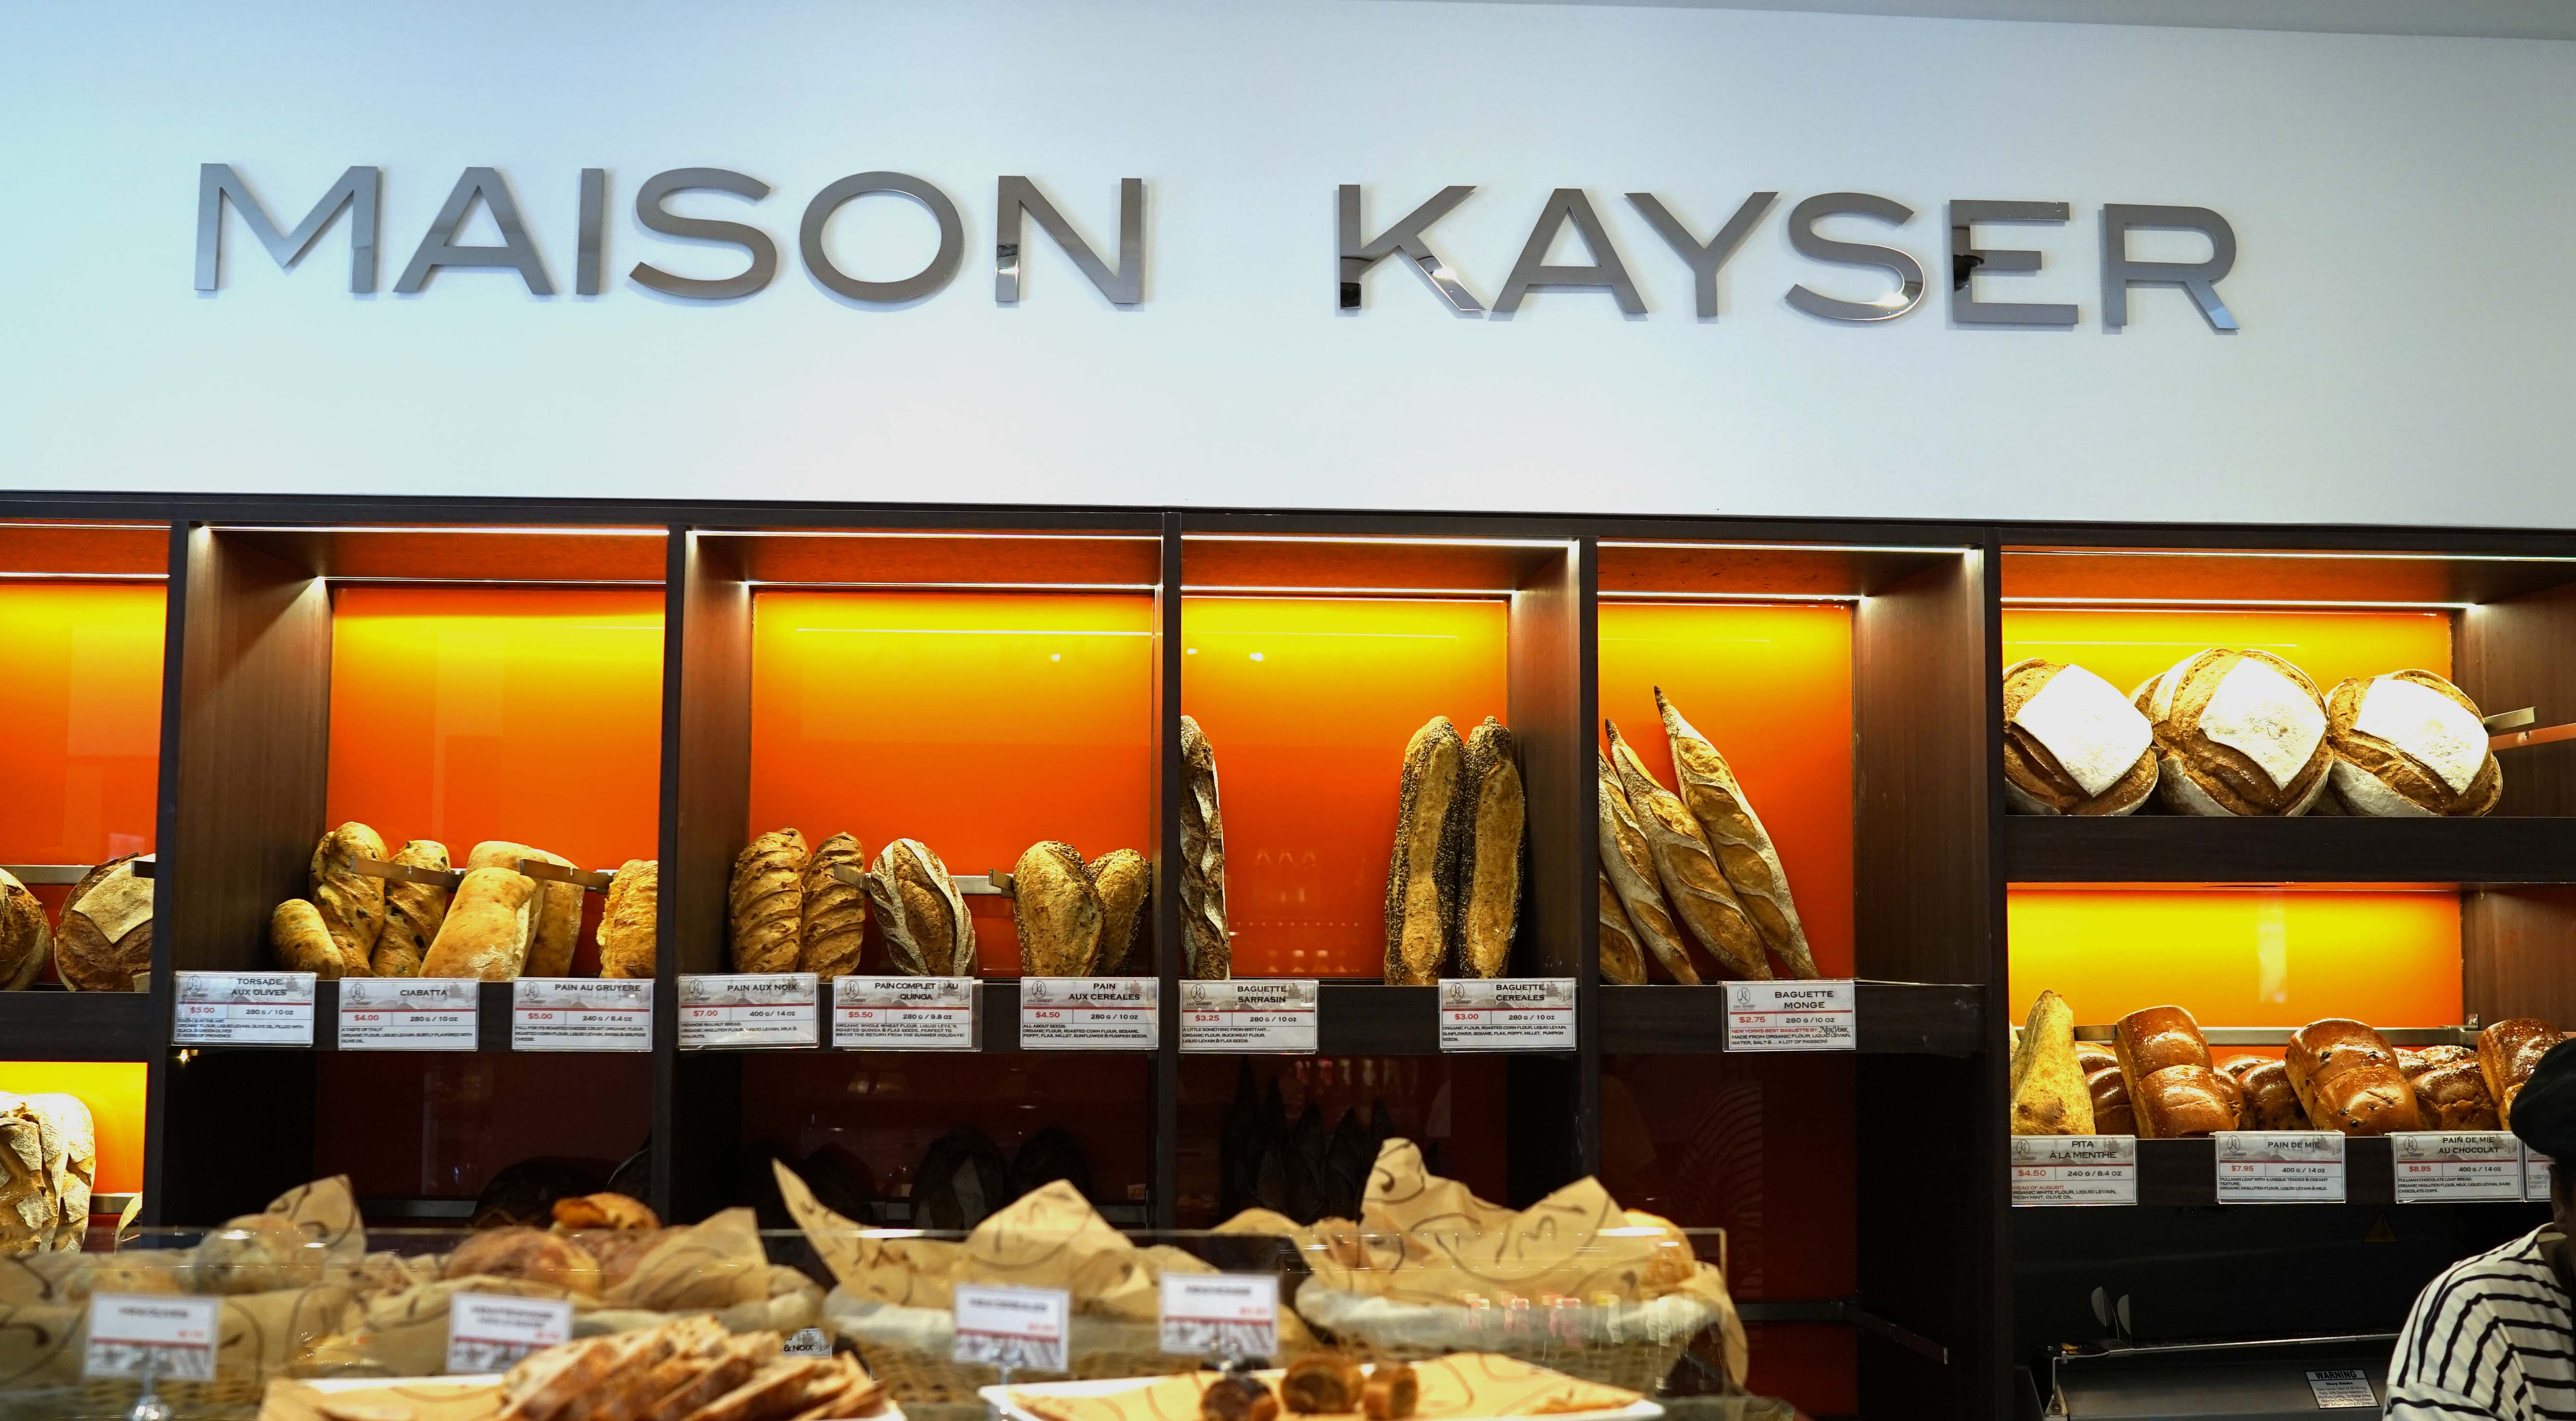 Maison Kayser sign above breads